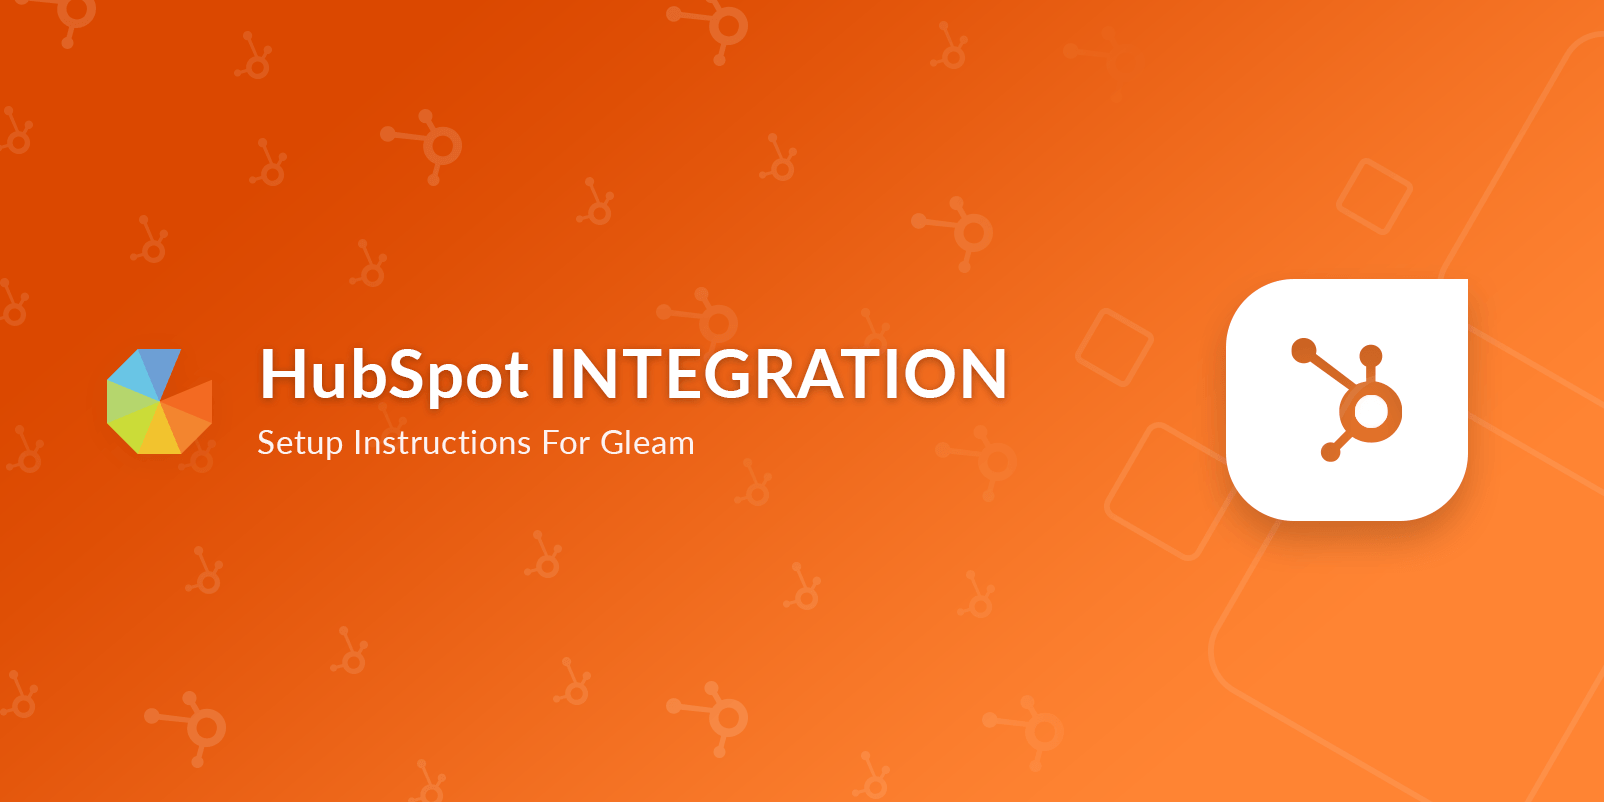 HubSpot integration setup instructions for Gleam